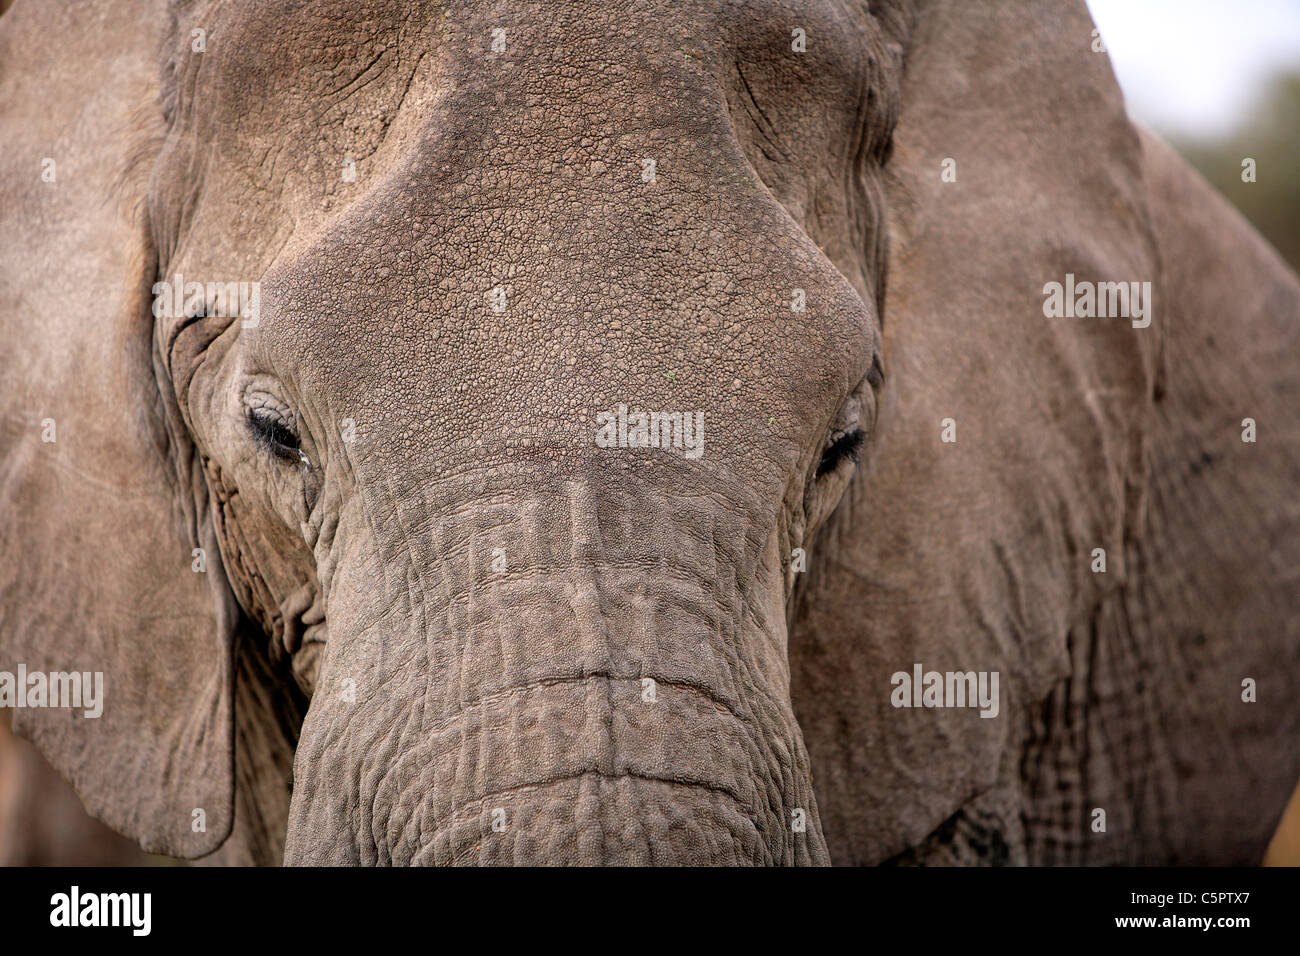 Loxodonta africana (elefante), Parque Nacional de Serengueti, Tanzania Foto de stock